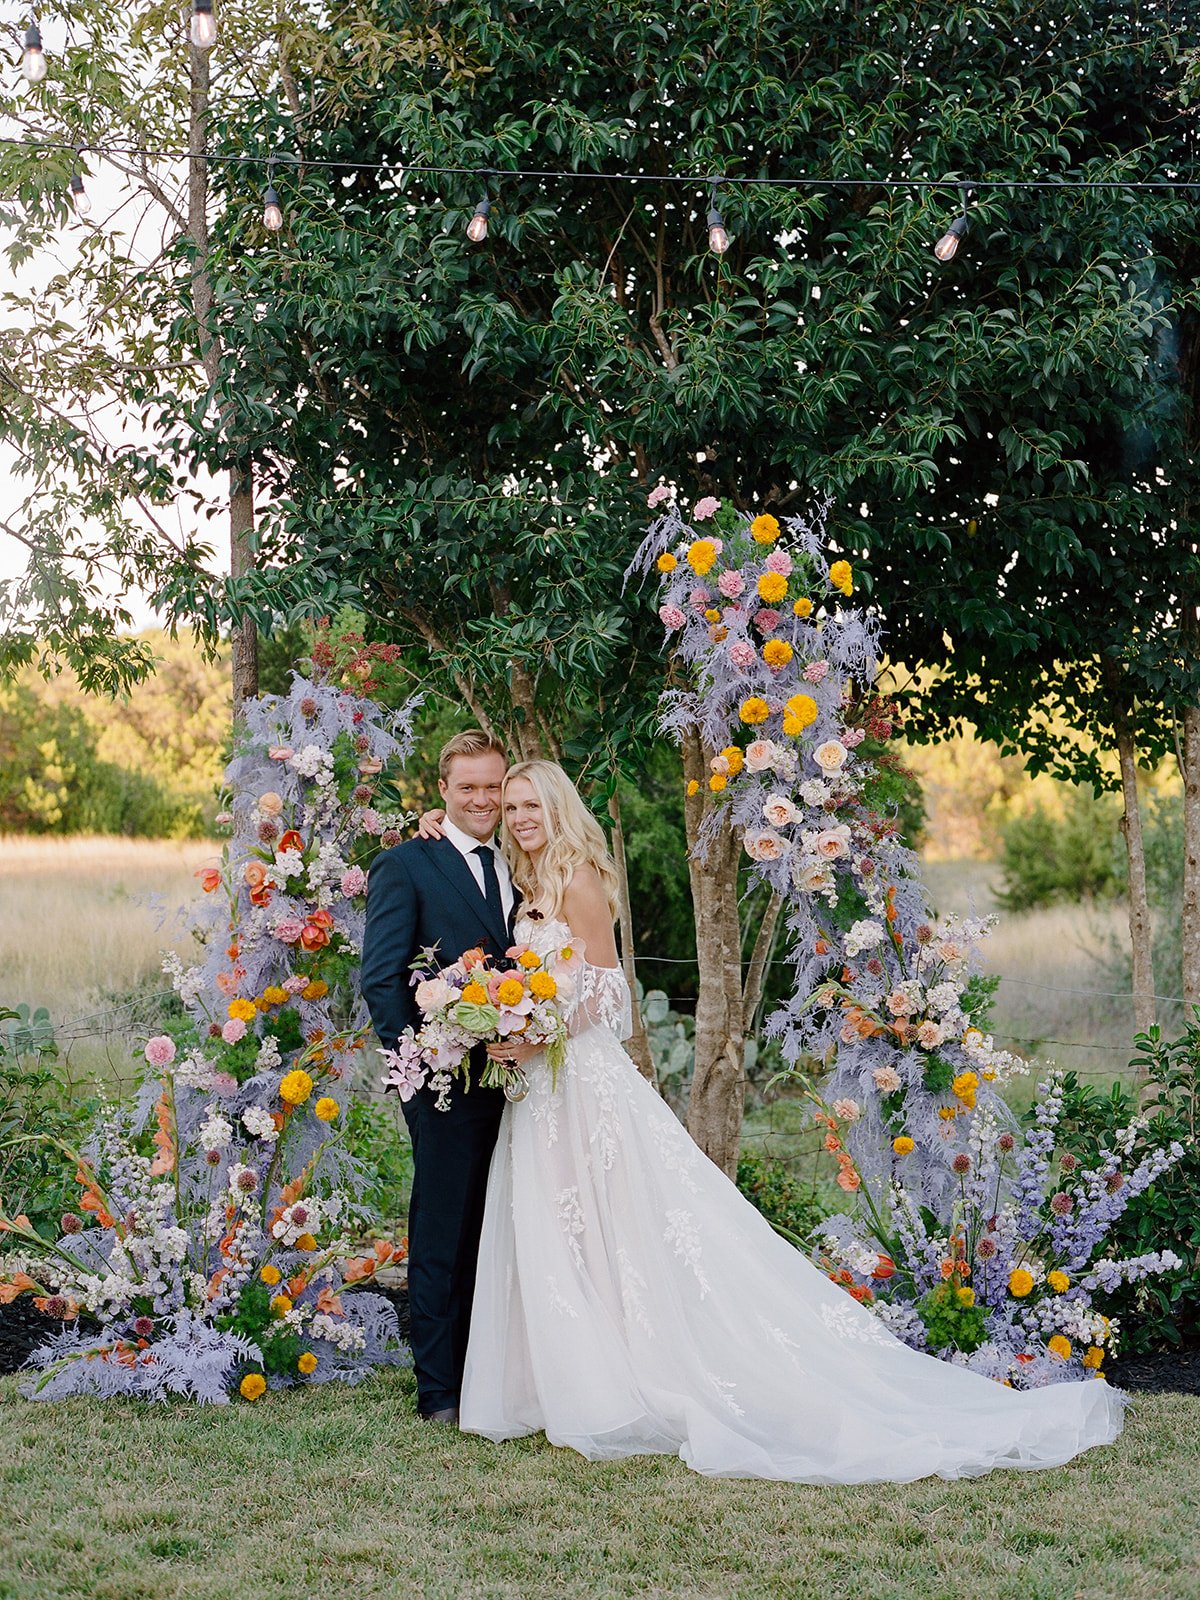 Best-Austin-Wedding-Photographers-Elopement-Film-35mm-Asheville-Santa-Barbara-Backyard-99.jpg